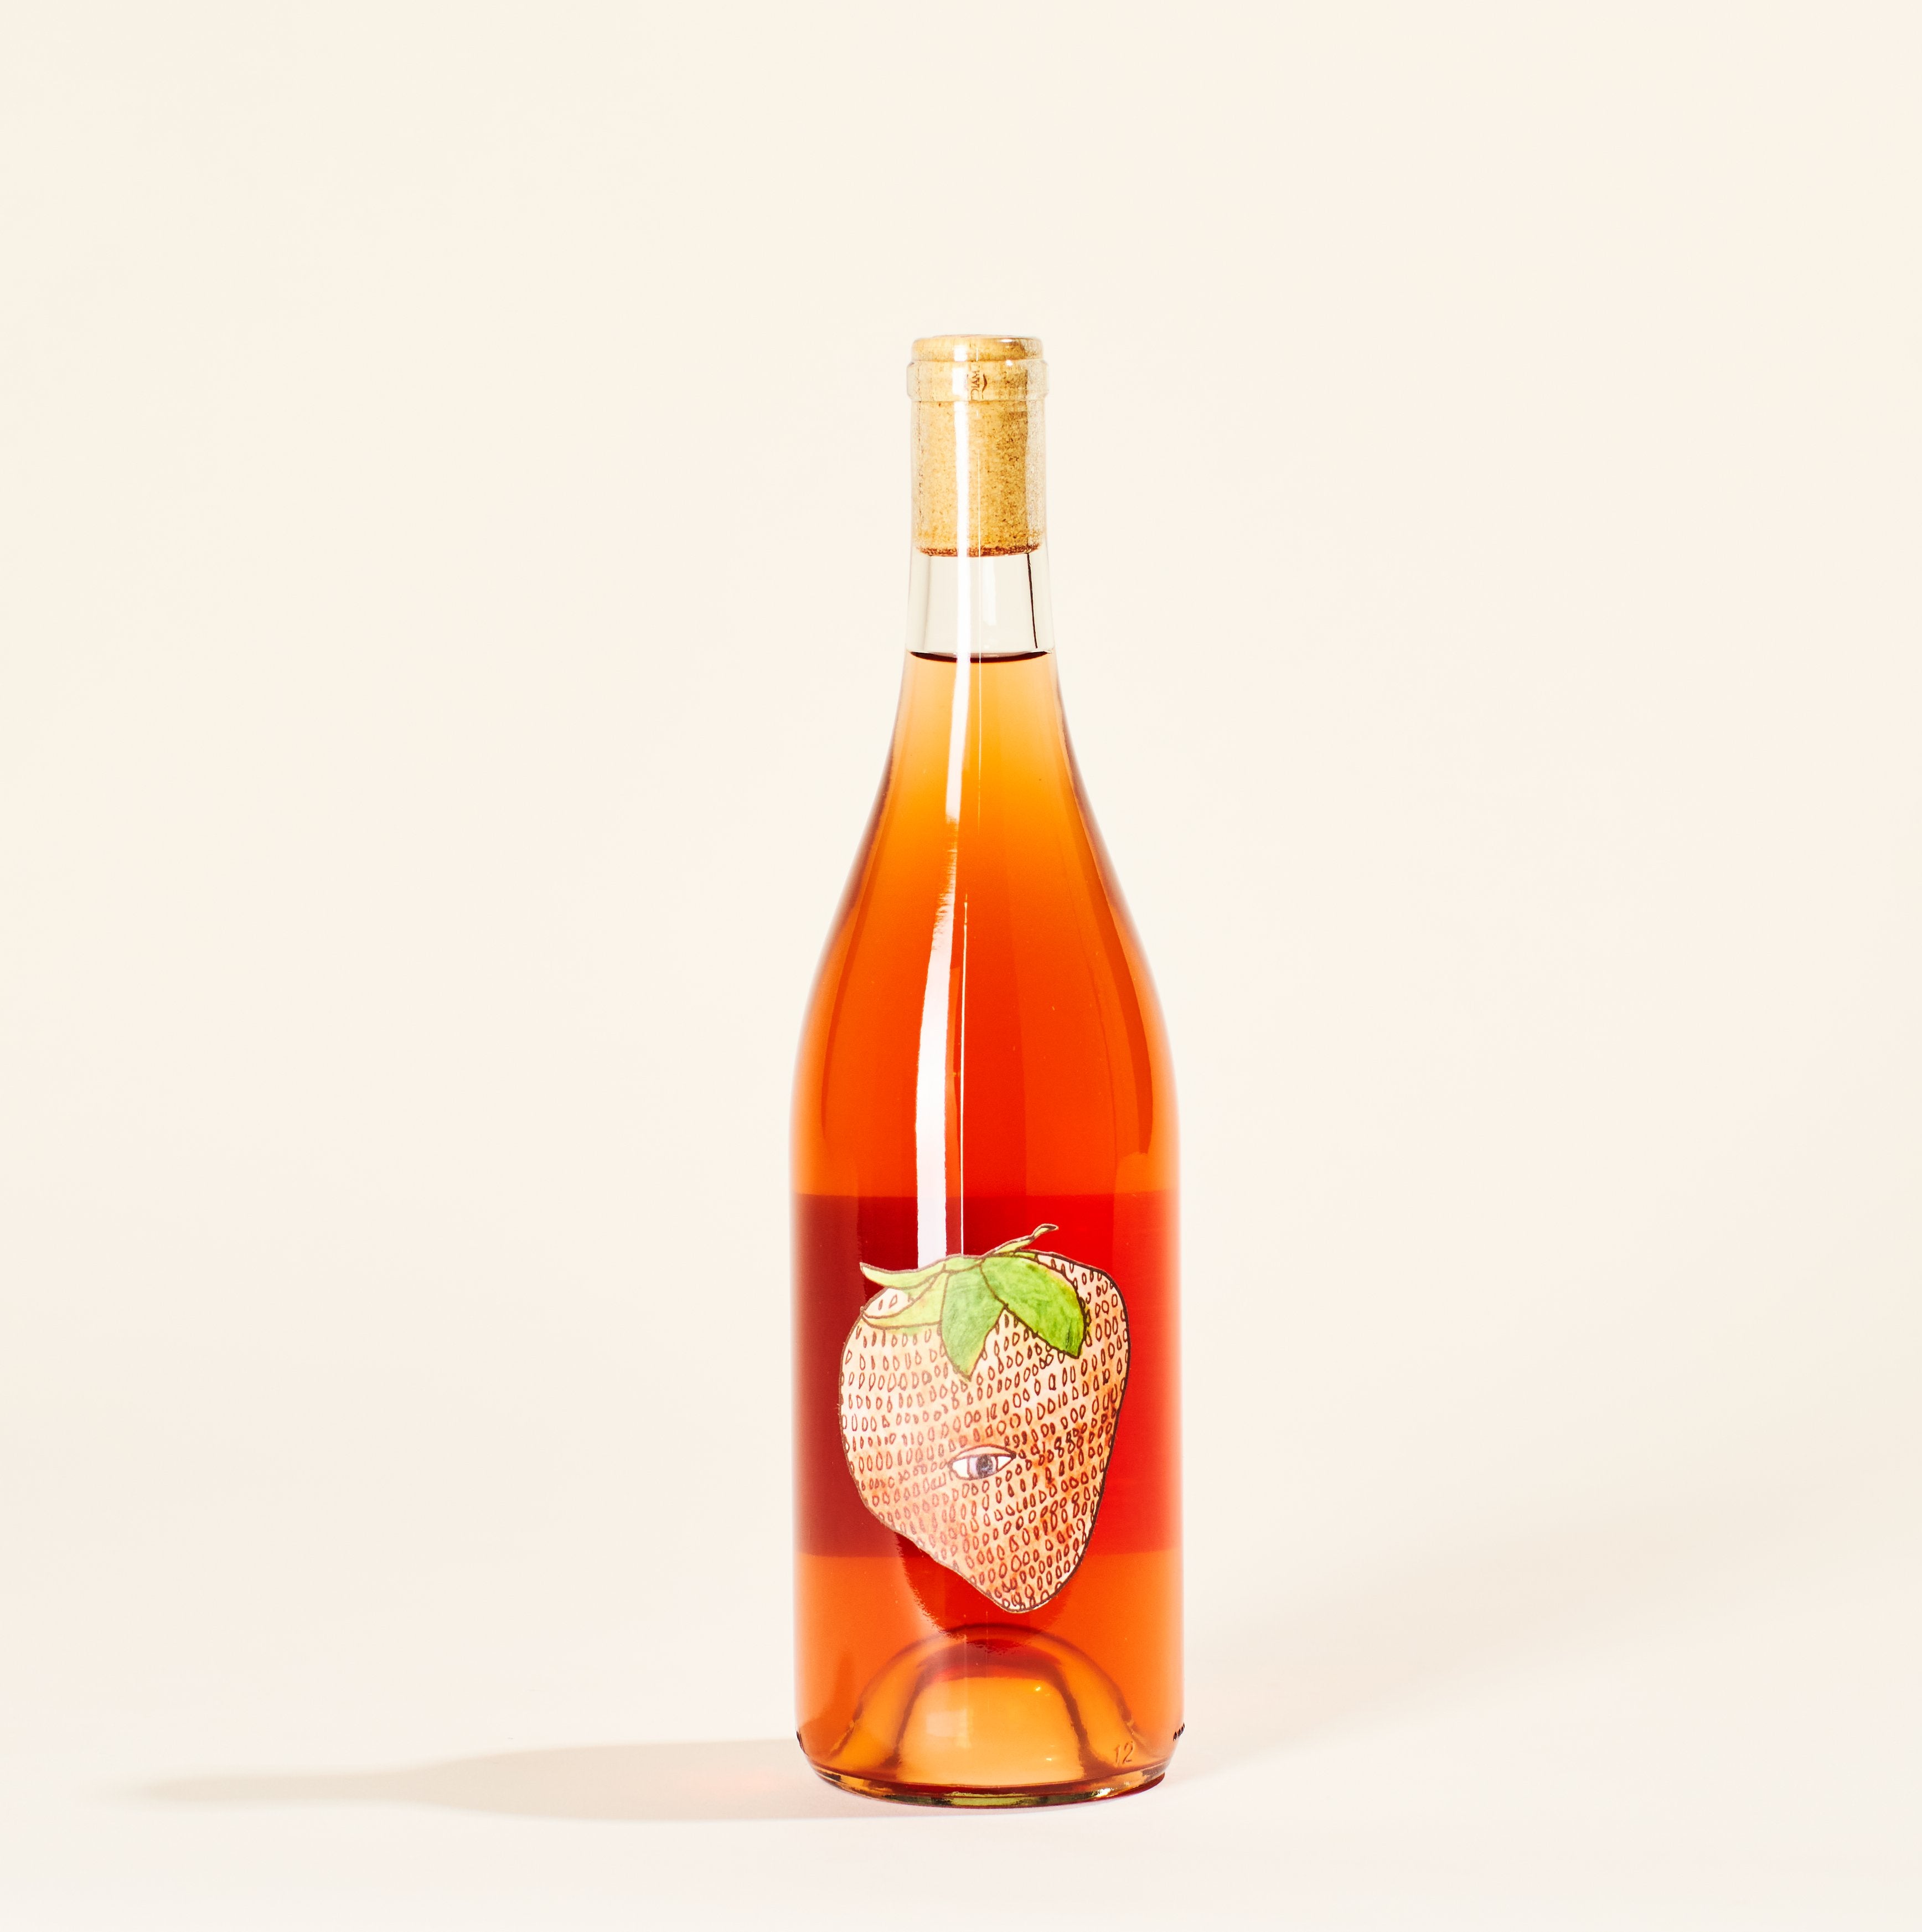 rosato las jaras califronia usa natural rose wine bottle